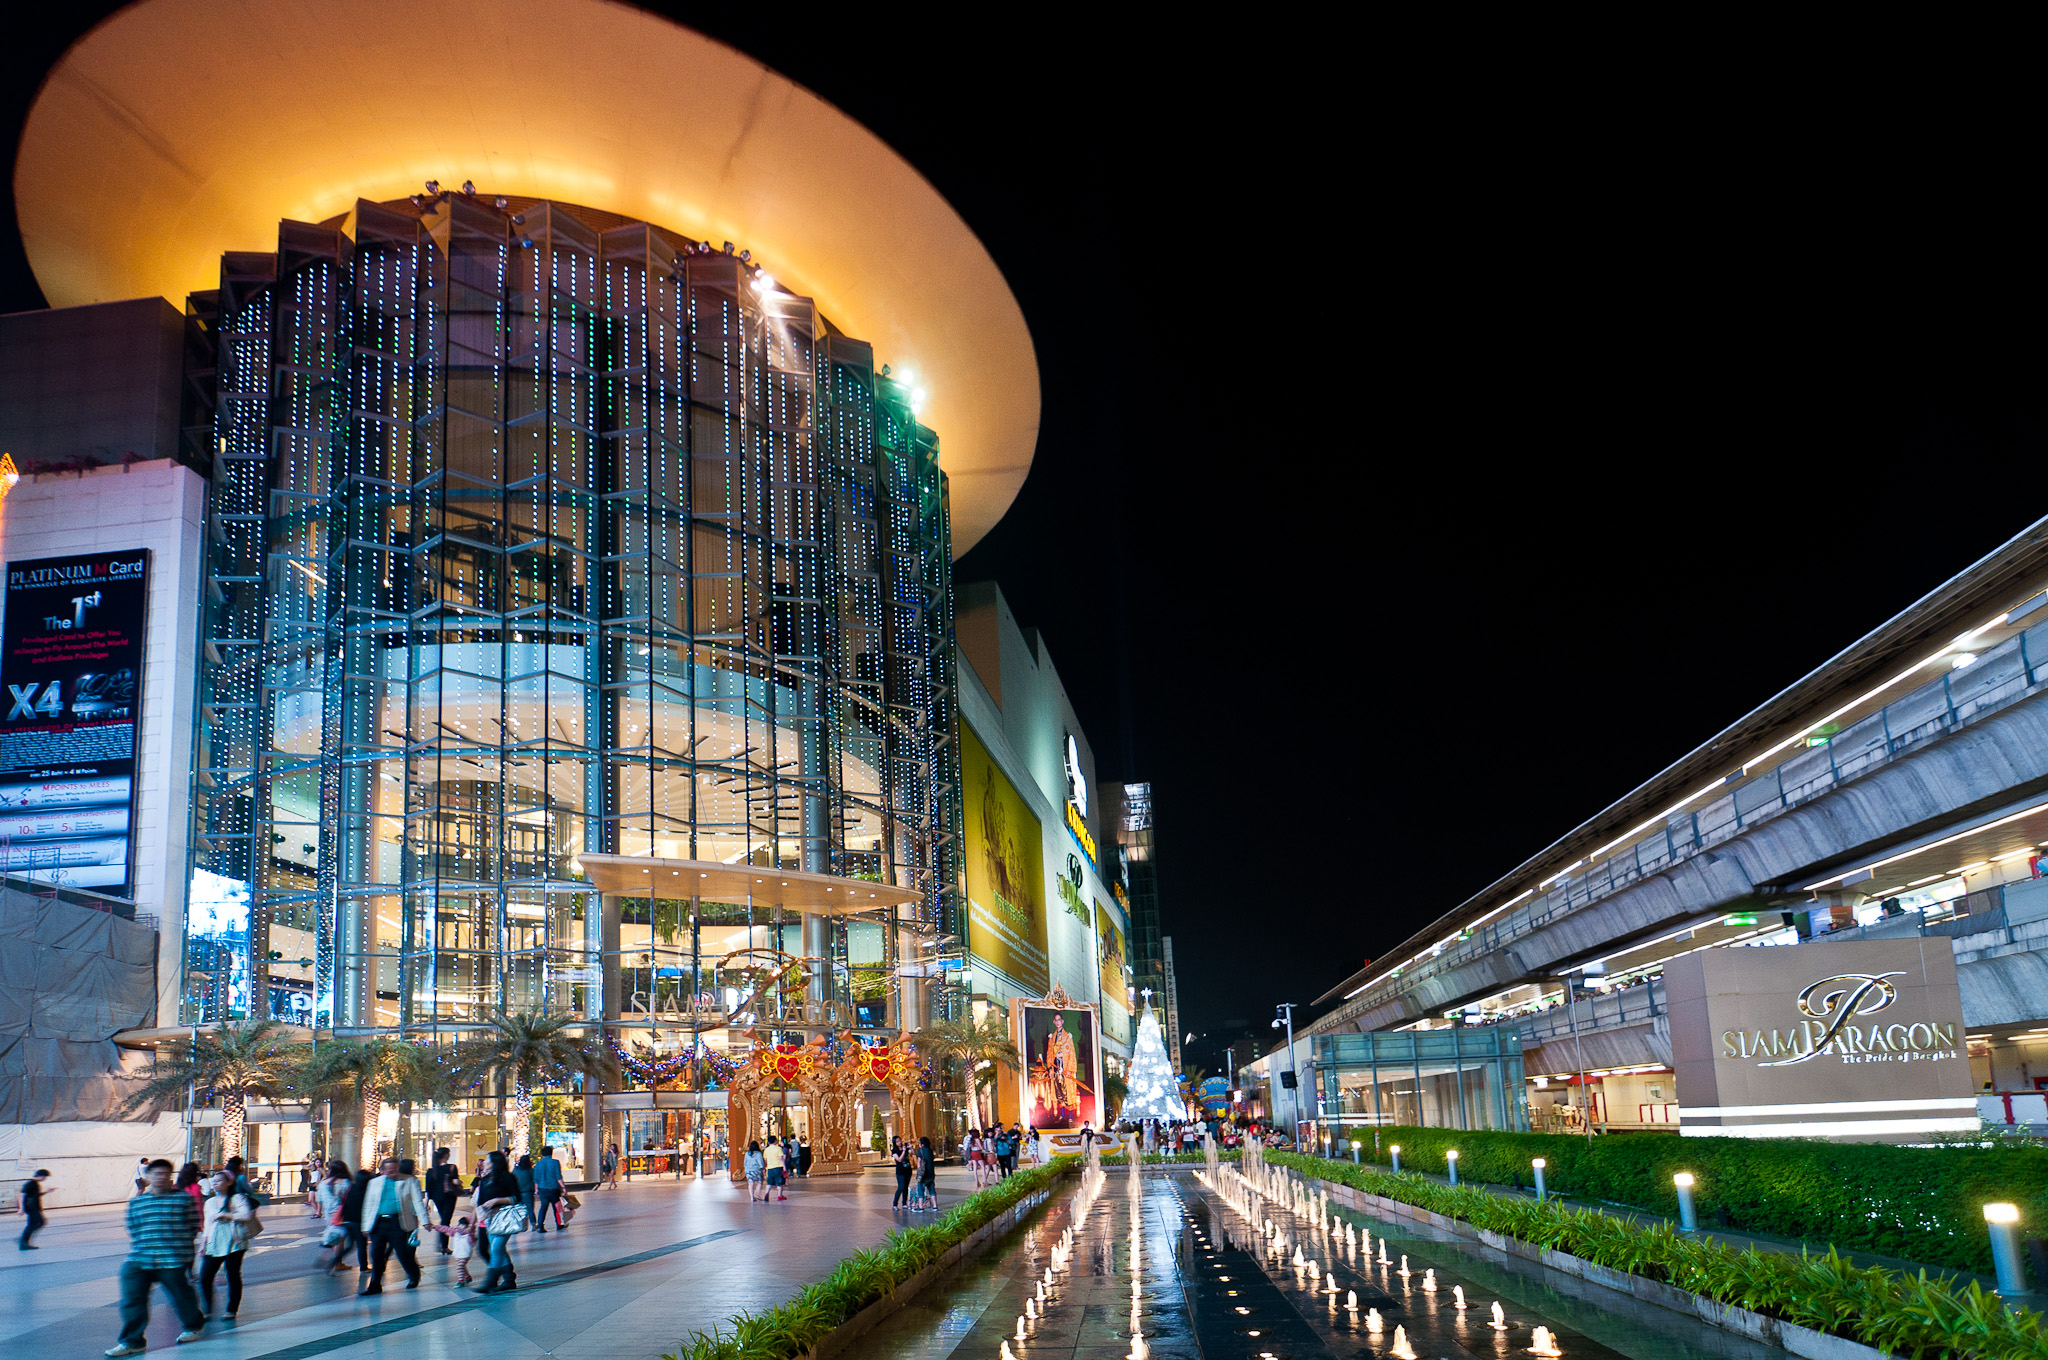 Siam Paragon - 3 Biggest Shopping Malls to Visit in Bangkok